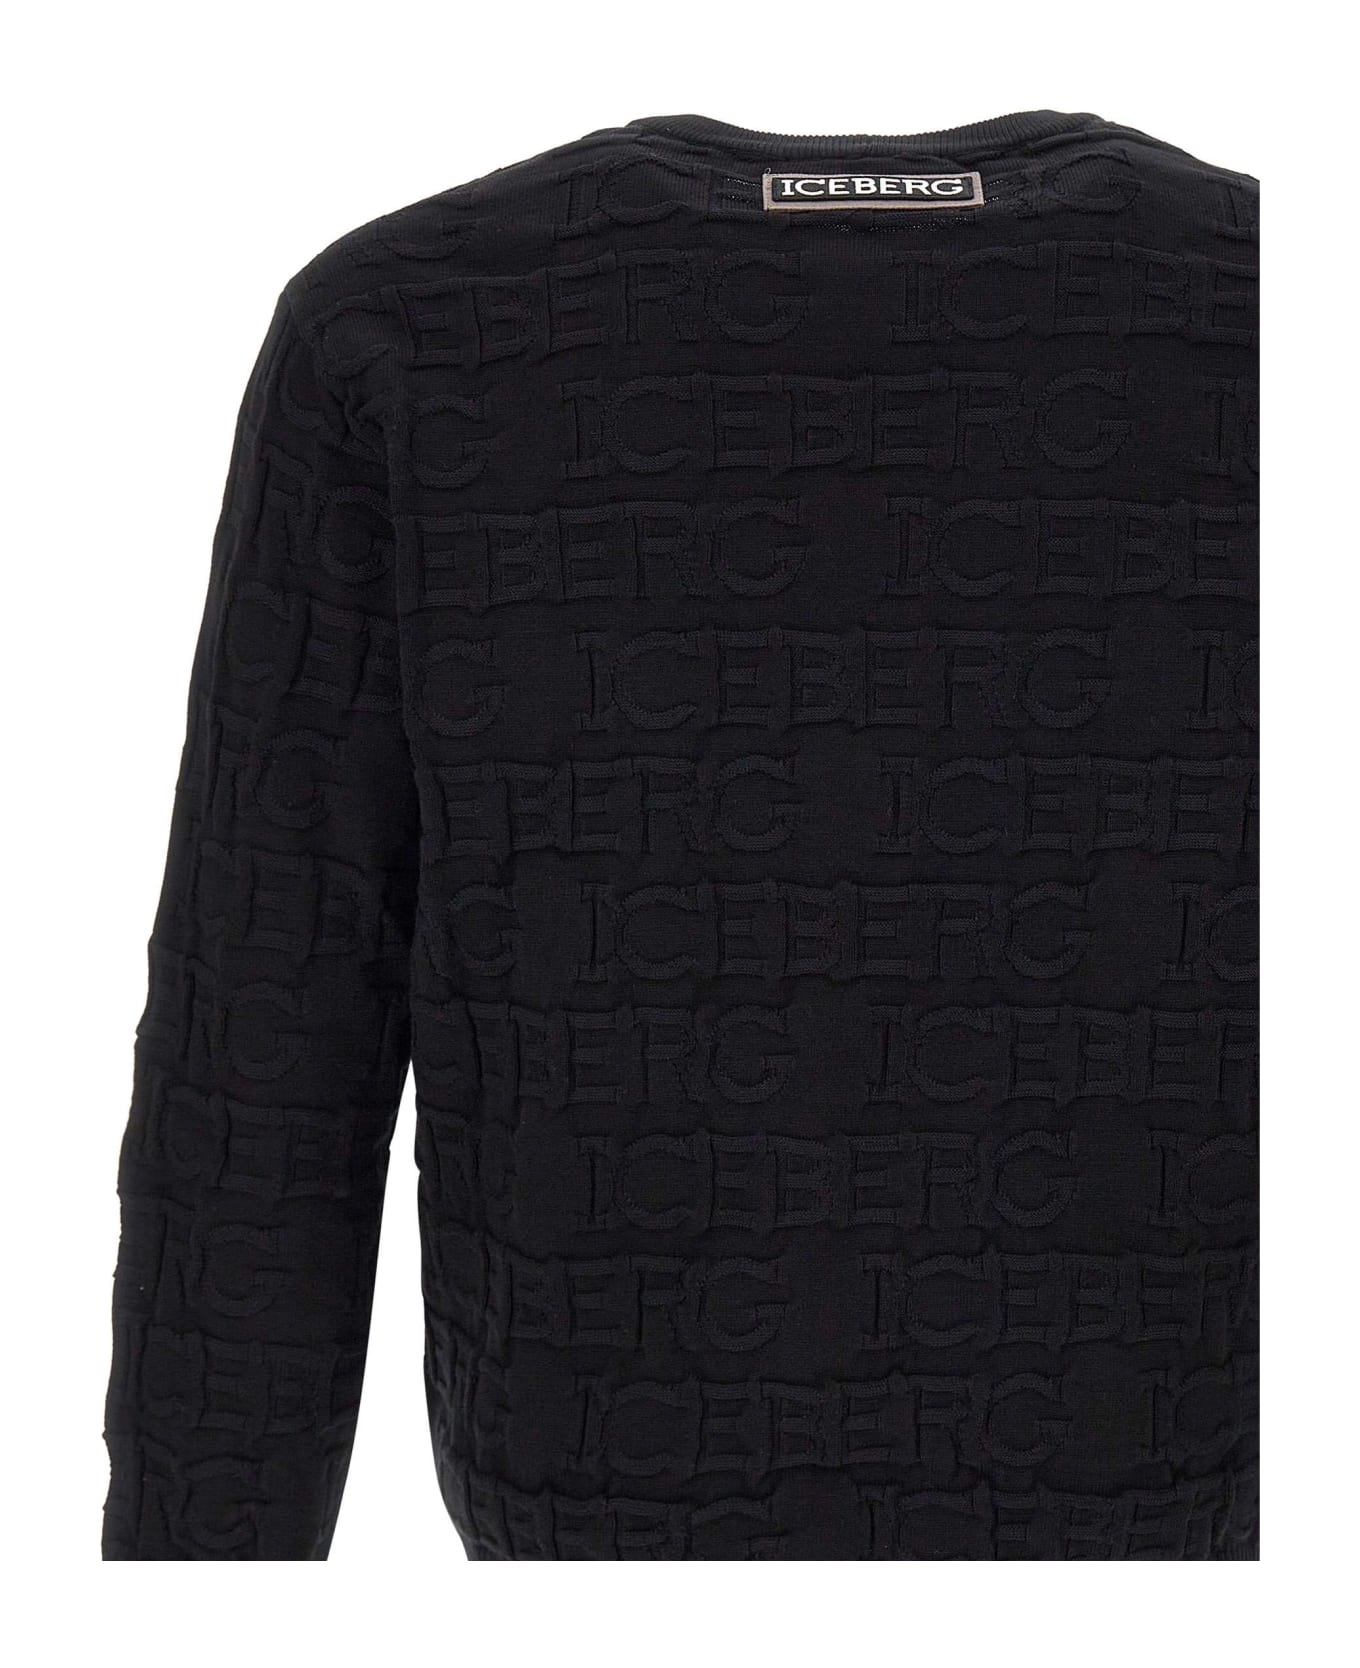 Iceberg Stretch Cotton Blend Sweater - BLACK